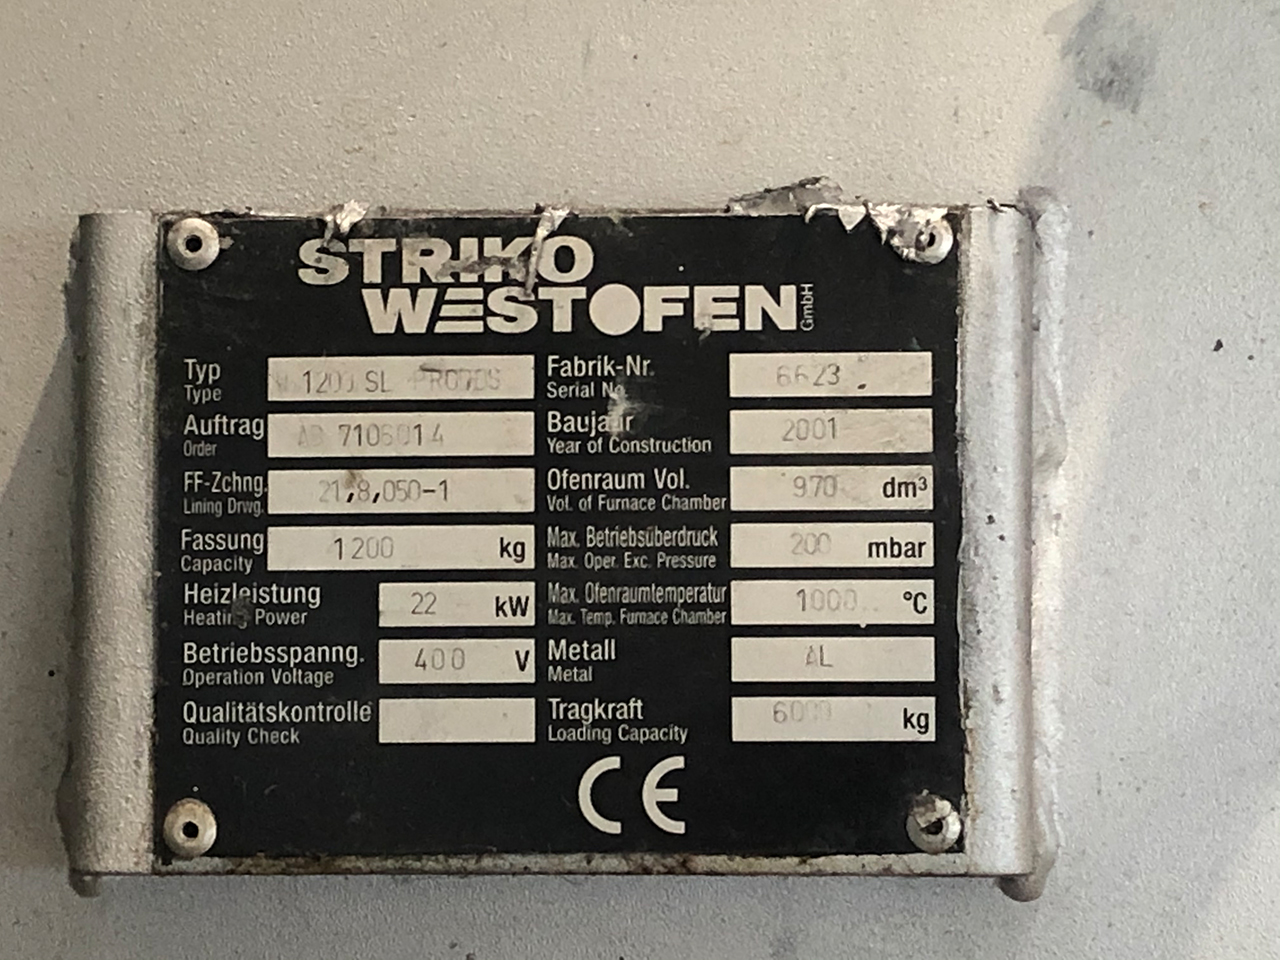 StrikoWestofen W 1200 SL ProDos DPC Дозирующая печь O1814, б/у